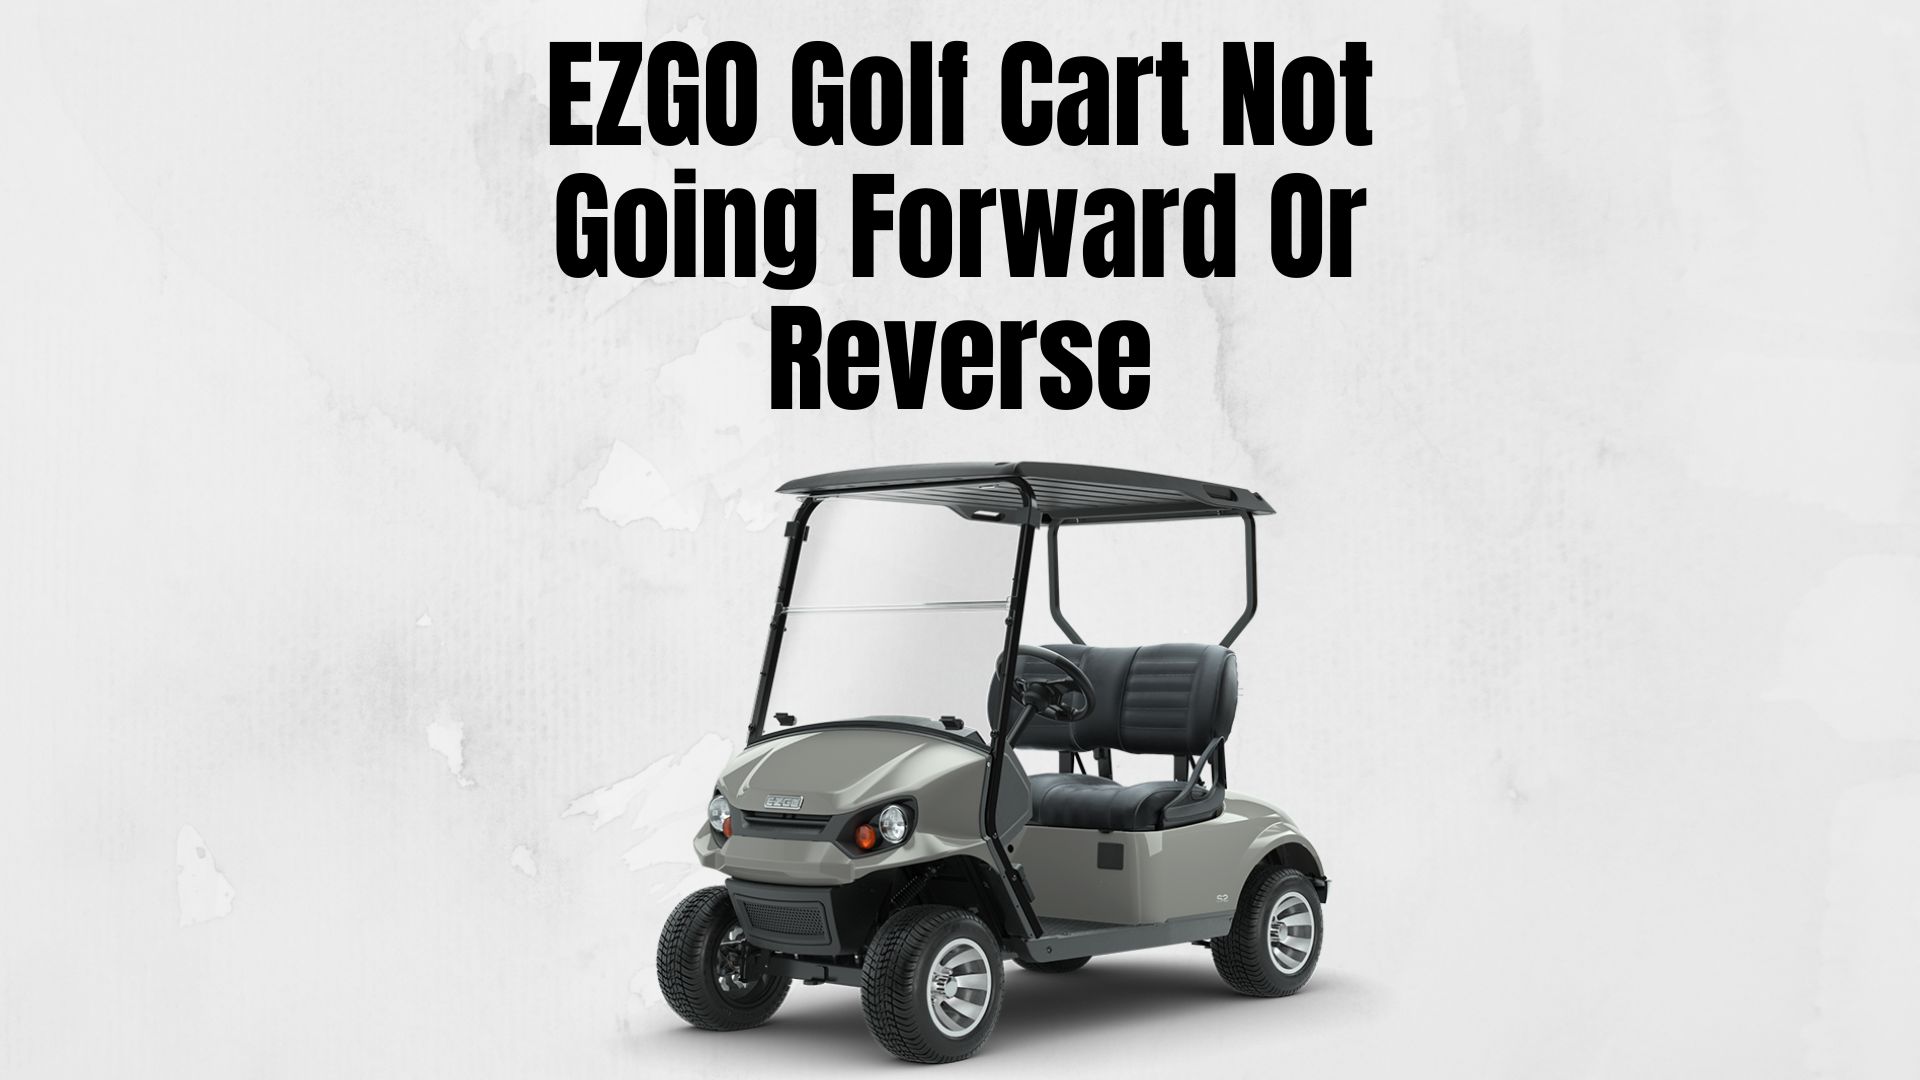 EZGO Golf Cart Not Going Forward Or Reverse